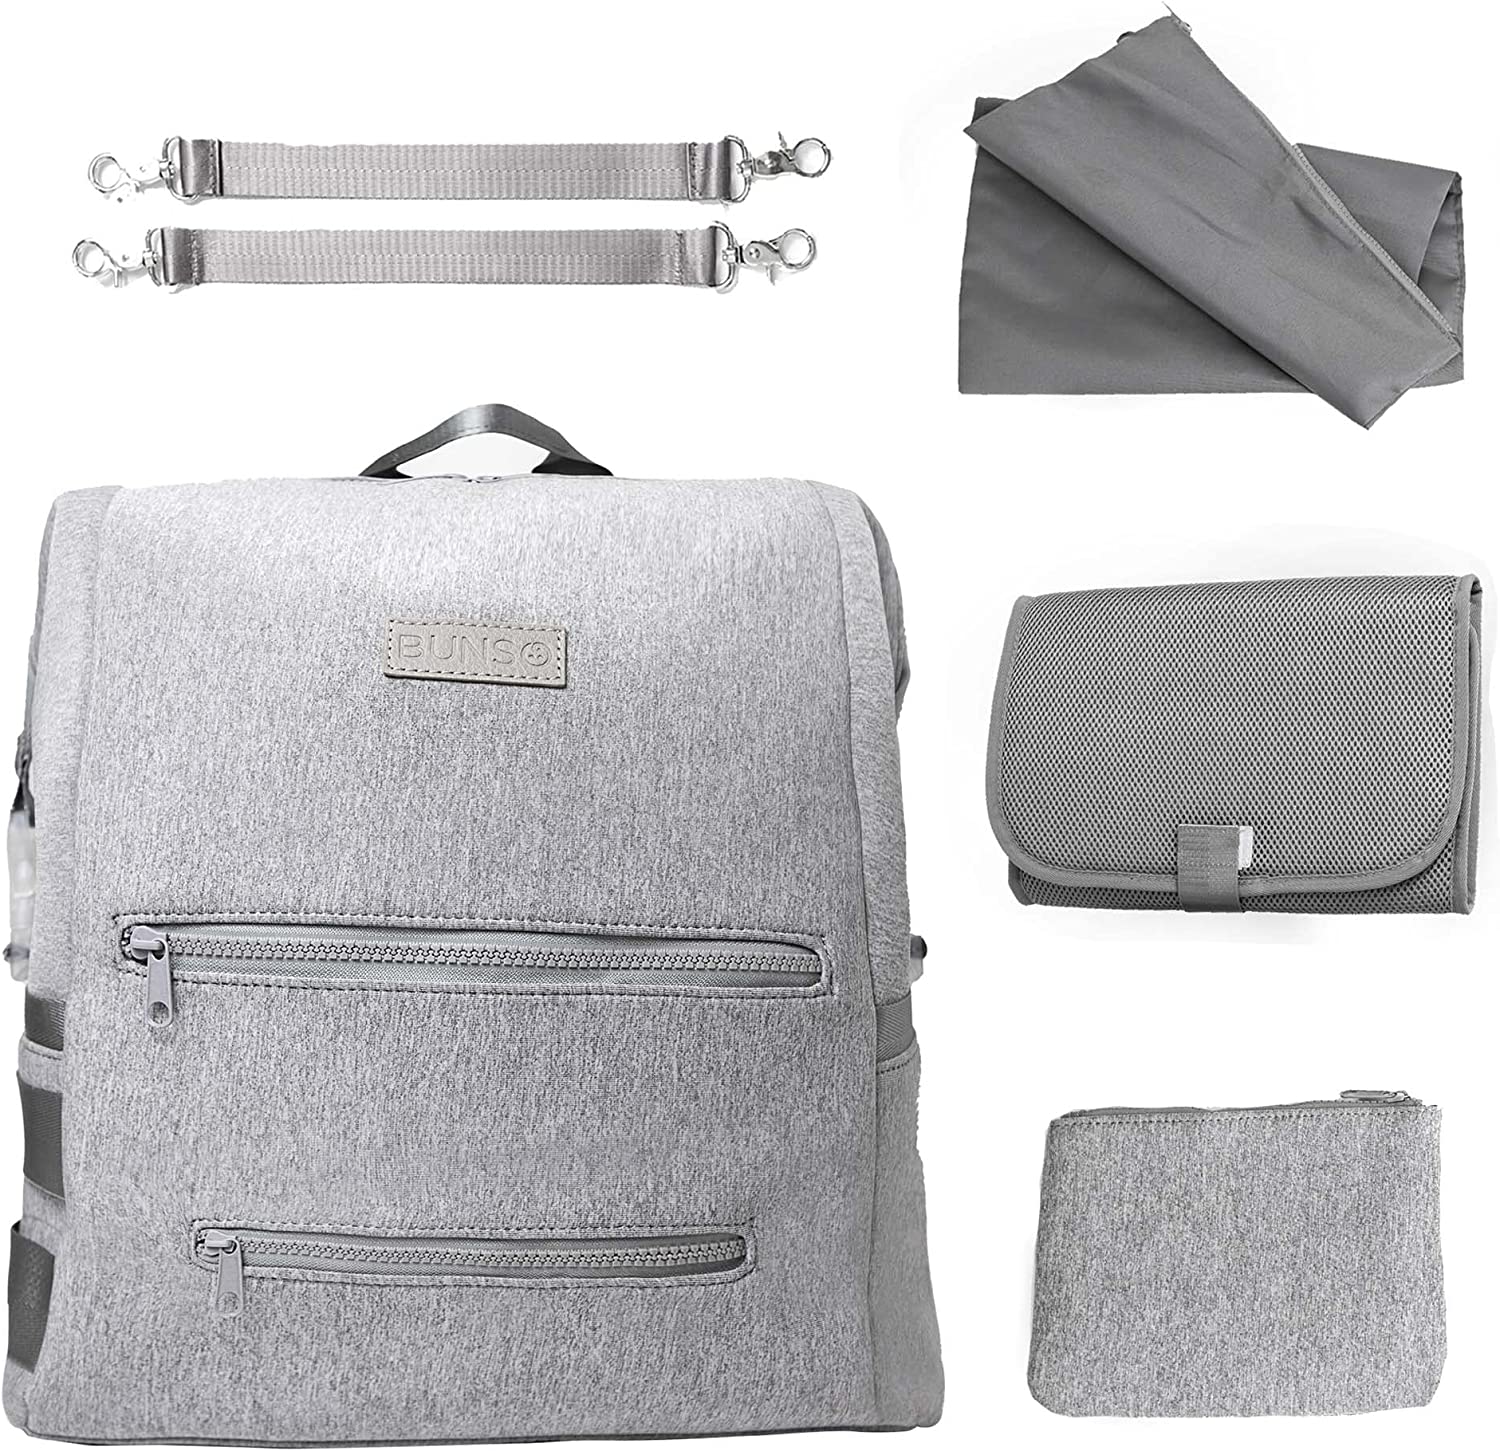 Neoprene Bag Backpack | Lightweight Multipurpose Minimalist Style Diaper Backpack| Water-Resistant Travel Baby Bag Gray